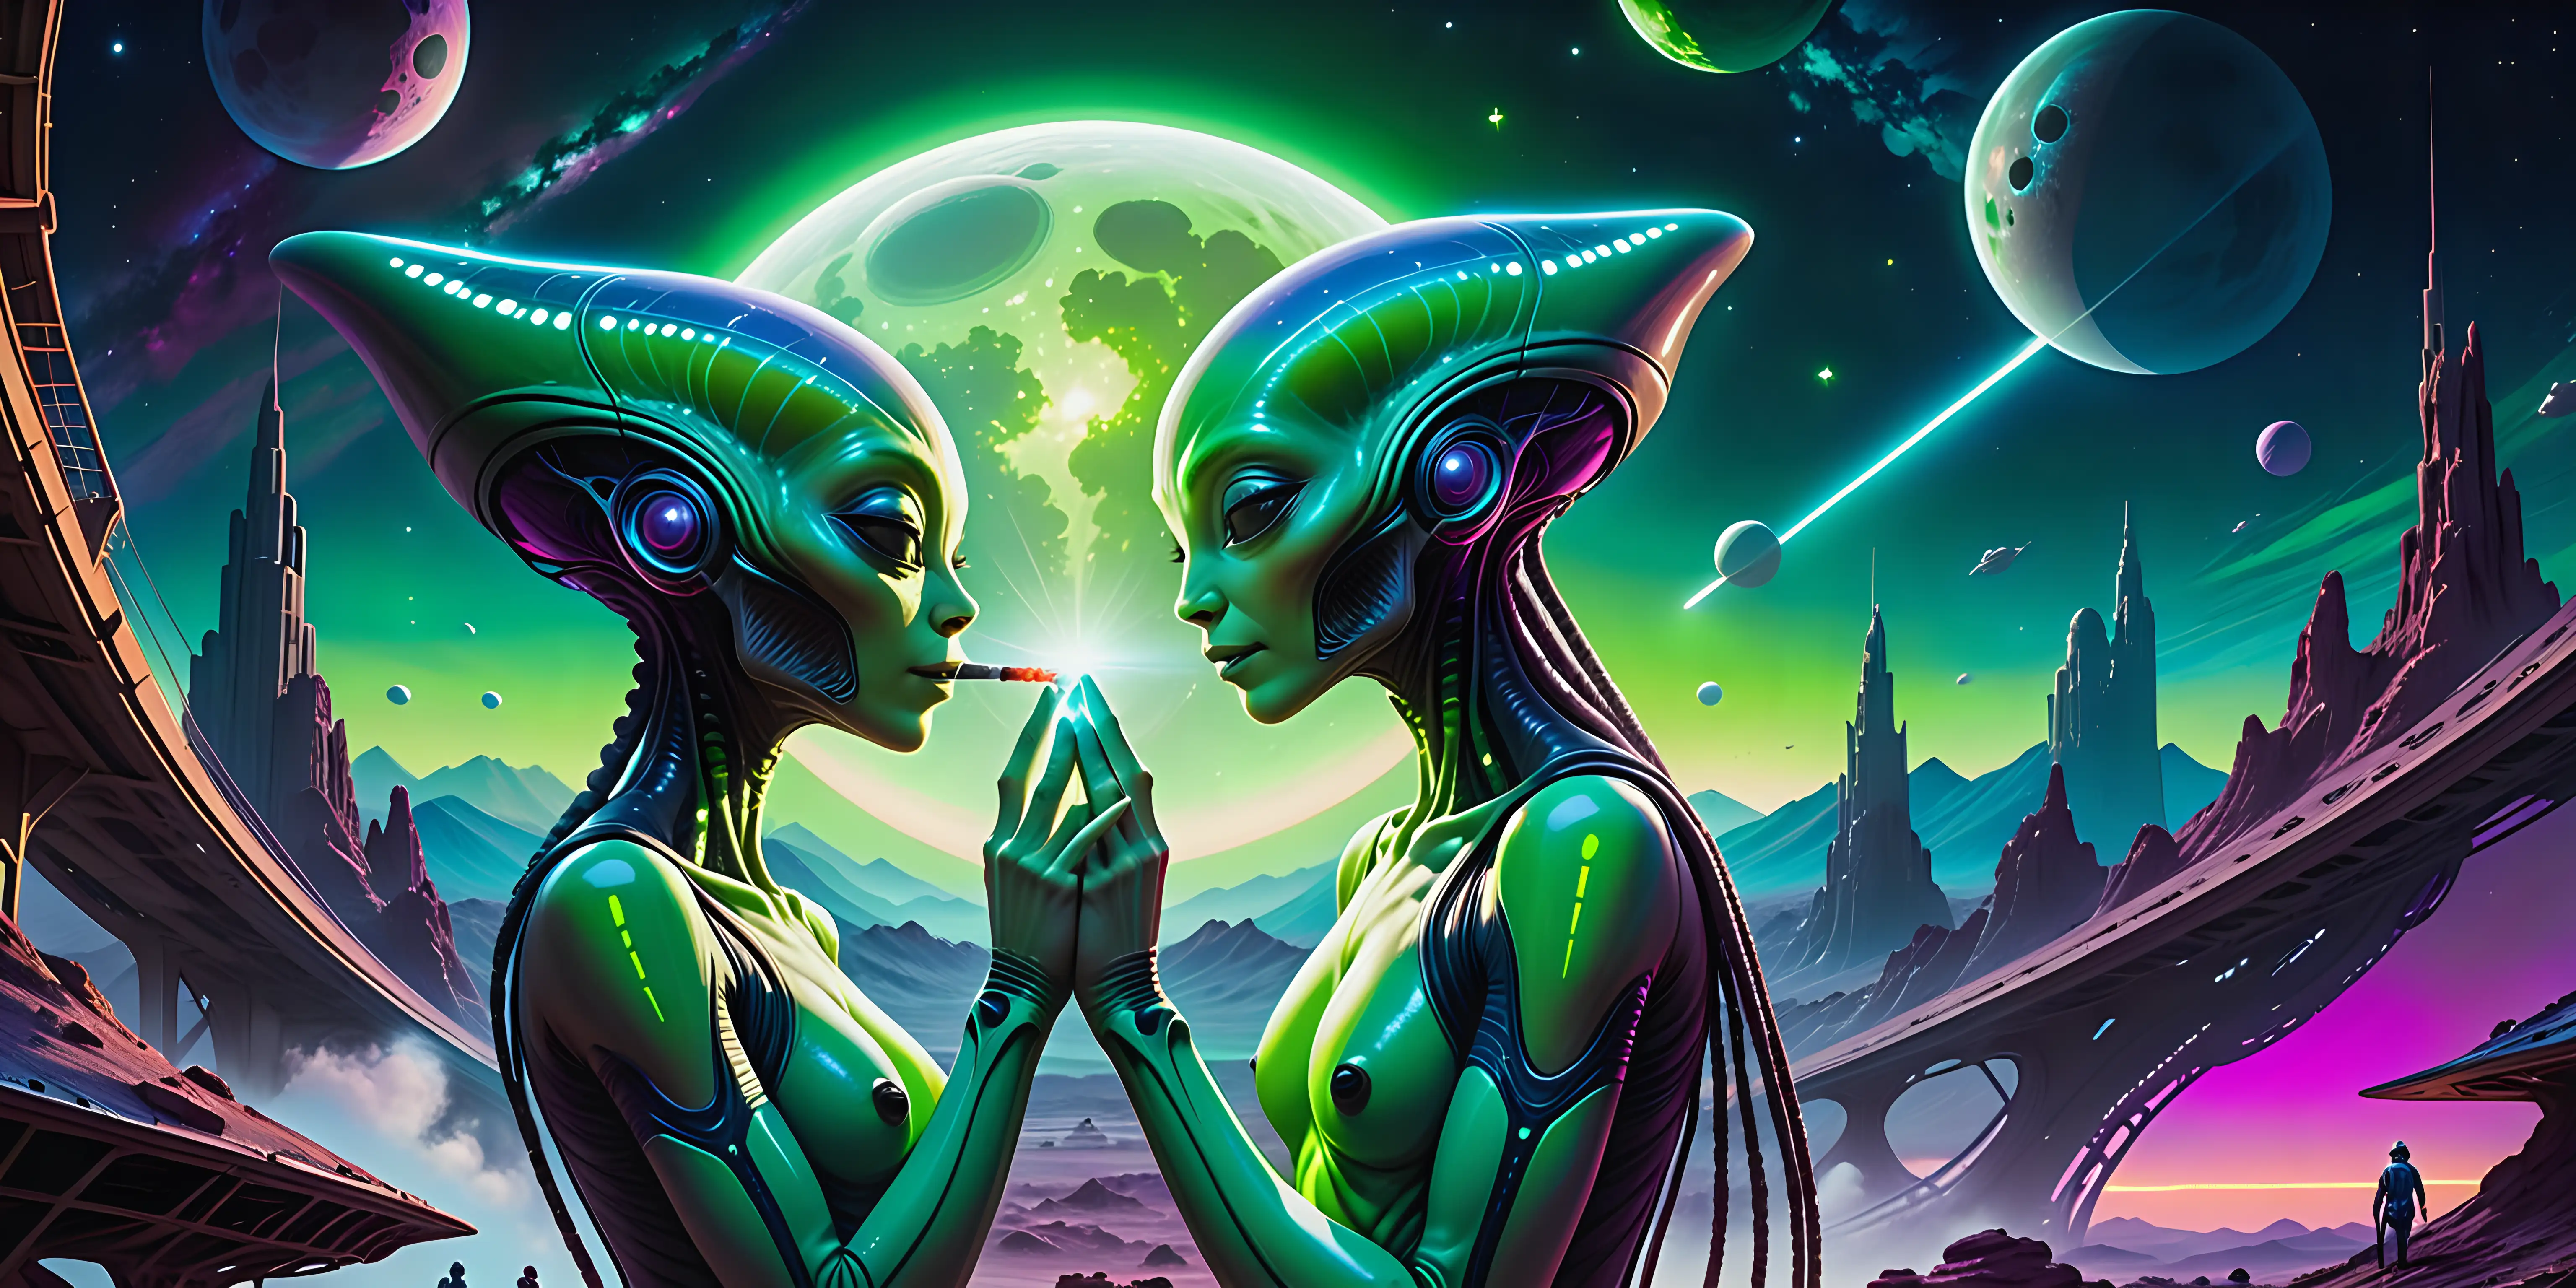 Extraterrestrial Love Cosmic Graffiti Romance on Lunar Landscape